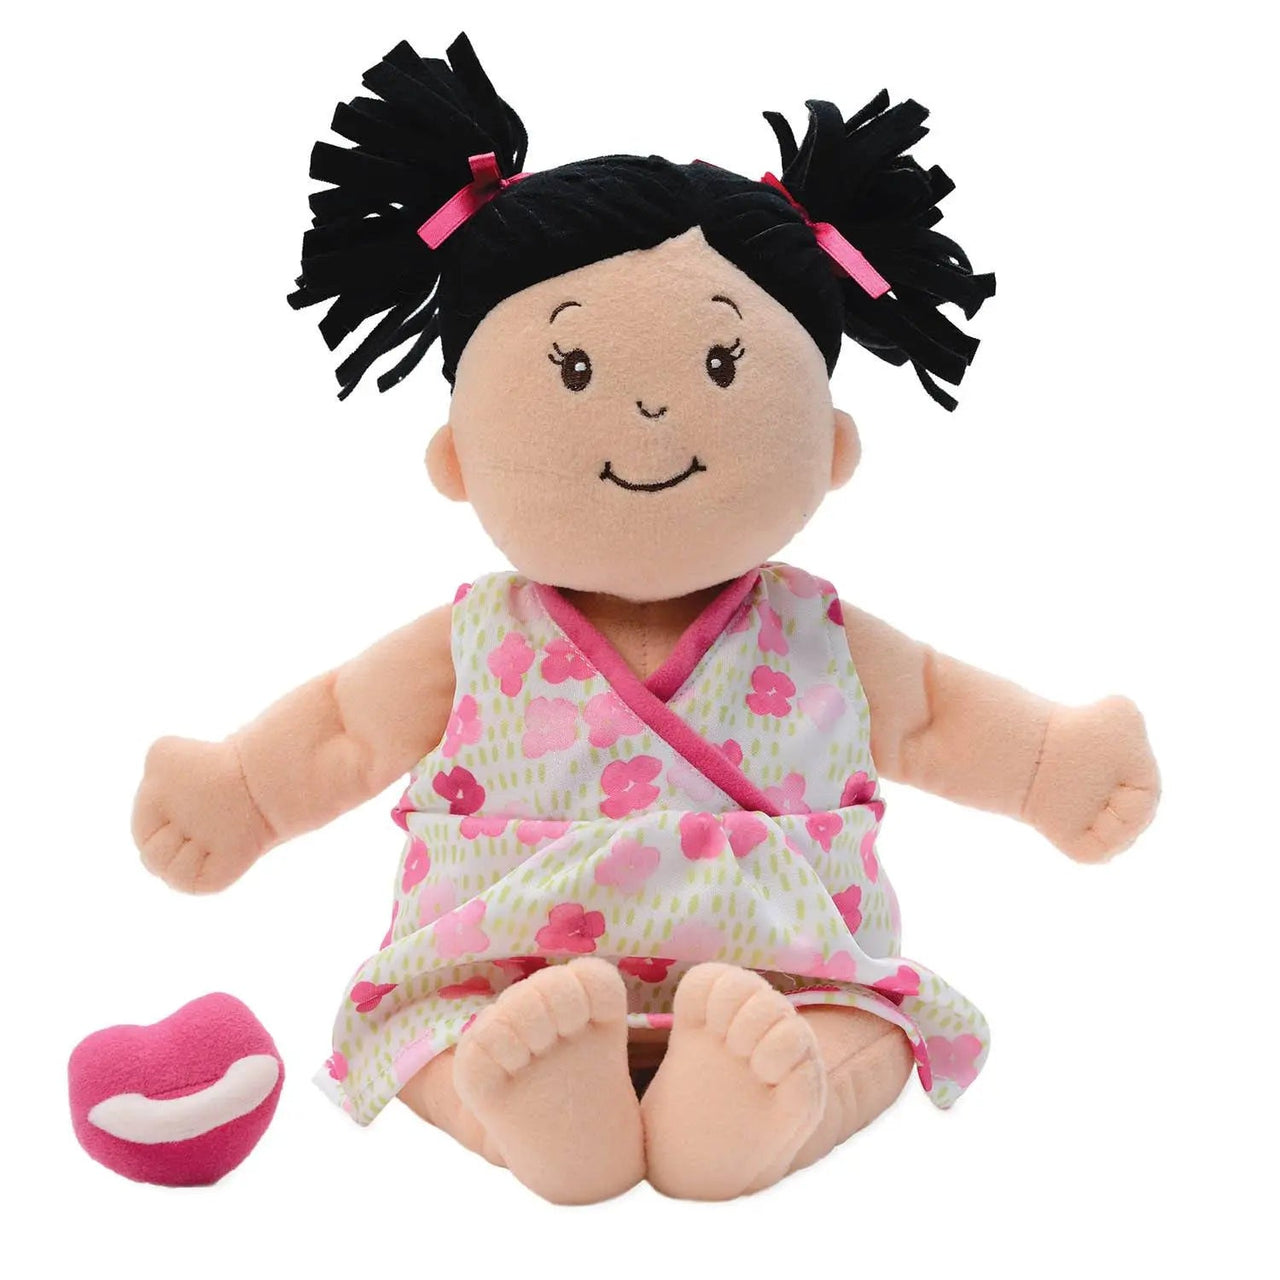 Manhattan Toy Baby Stella Peach Doll with Black Hair